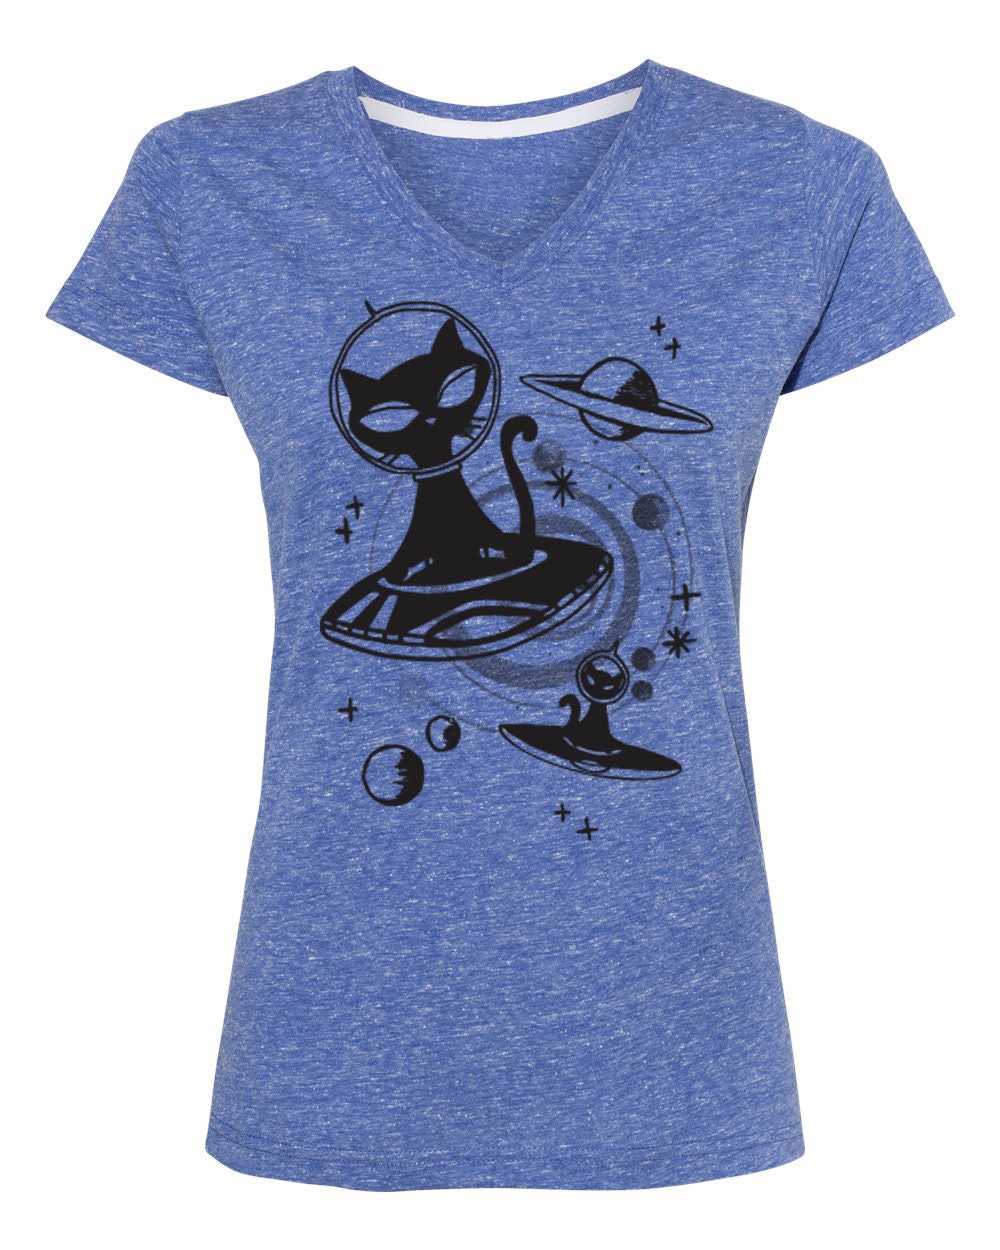 Space alien cute cat women's funny premium t-shirt